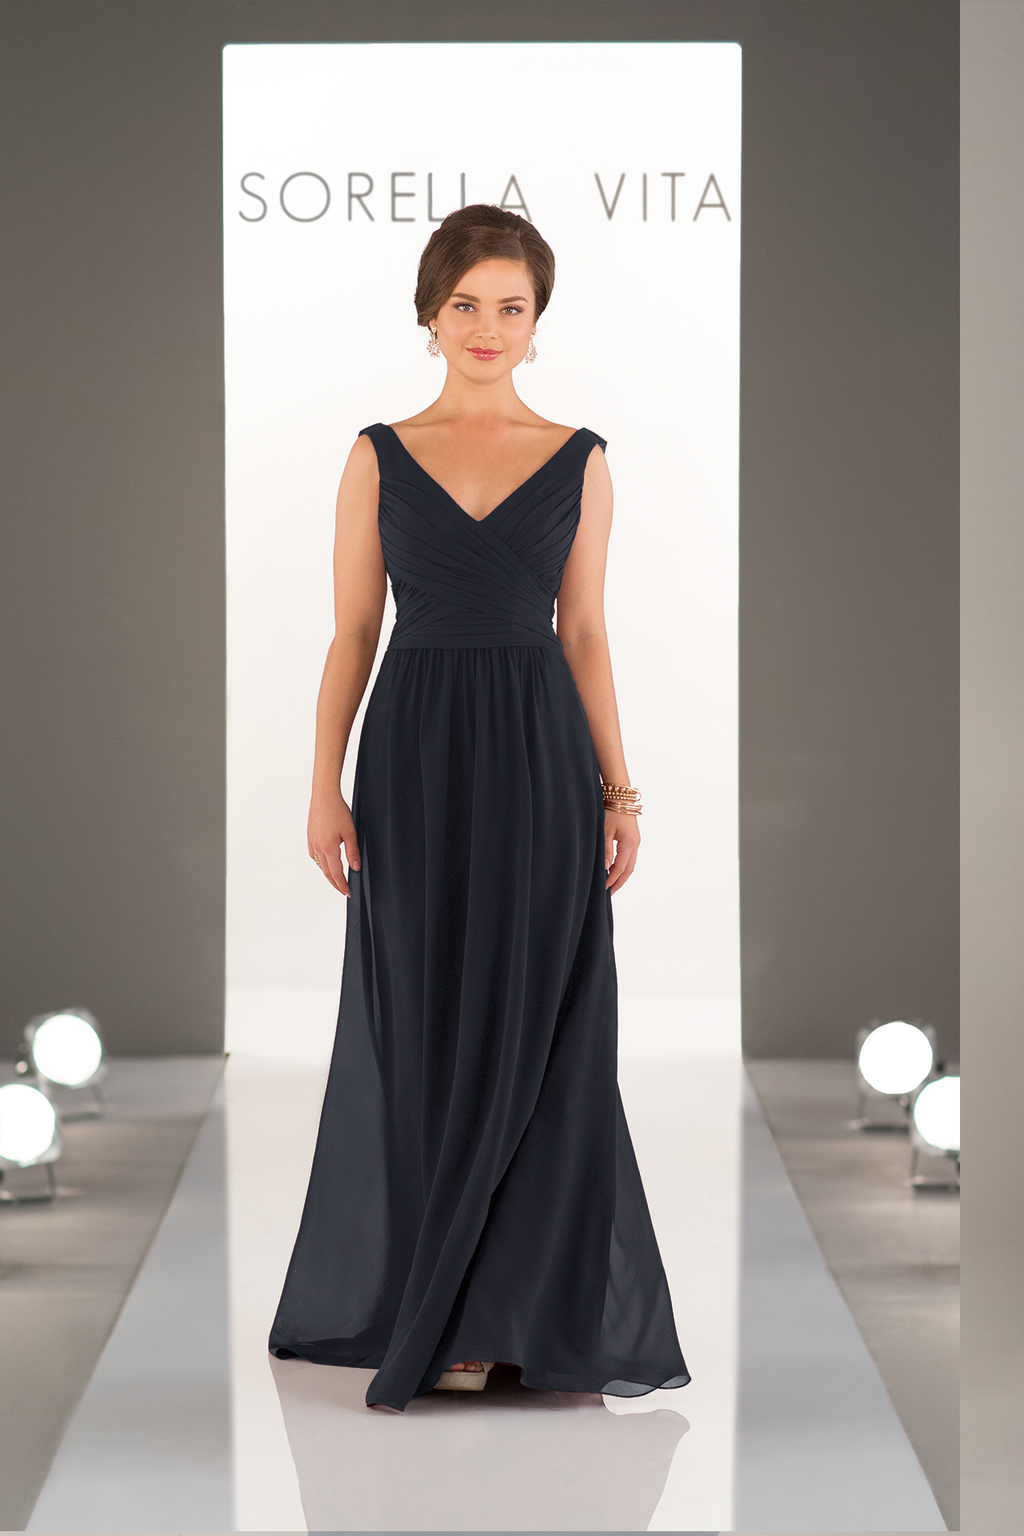 Sorella Vita Dress Style 8932 (Navy-size 18) Prom, Ball., Black-tie, Bridesmaid, Pageant